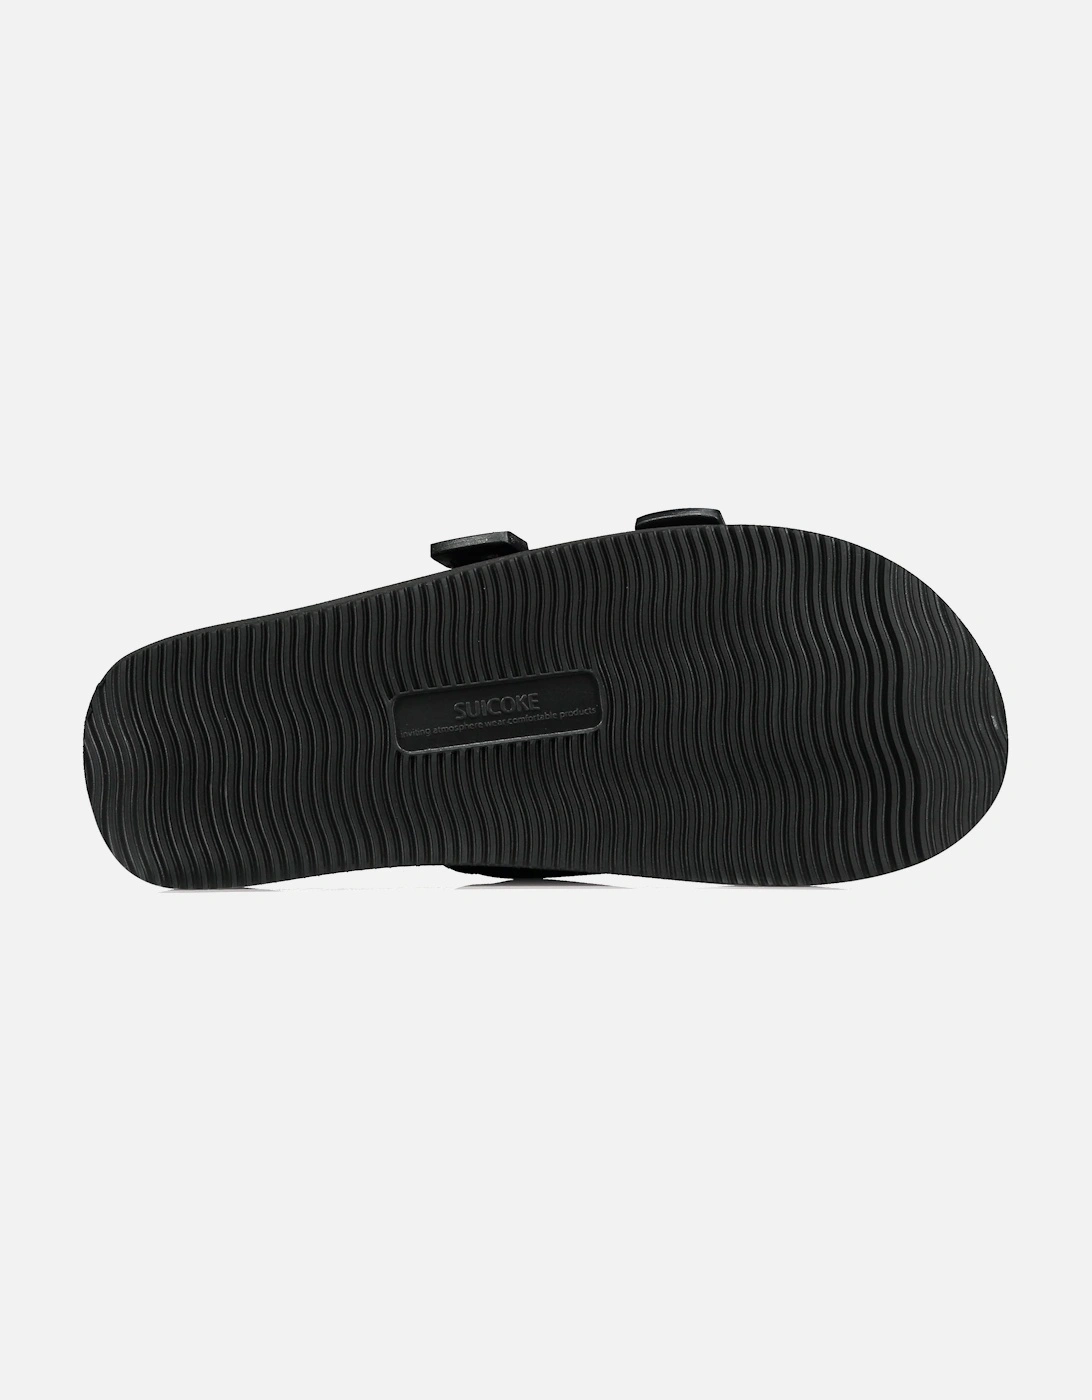 KAW-Cab Sandals - Black or White